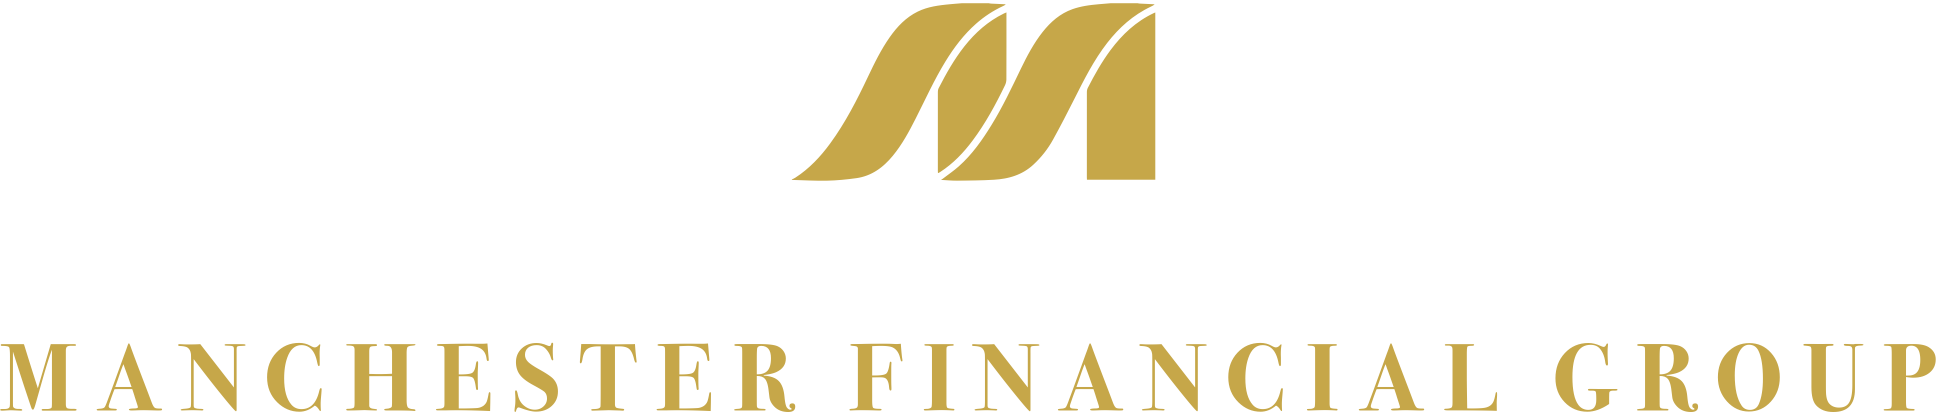 Manchester Financial Group_Logo_Lockup